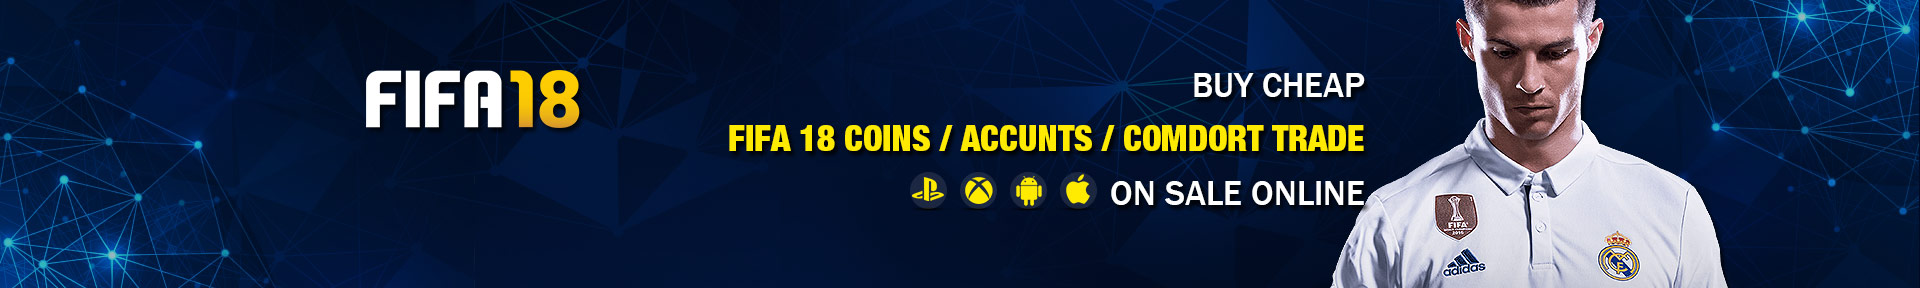 FIFA 18 PS4 Account, Buy 18 PS4 Web App Market Actived Account, Cheap FIFA PS4 Coins Mule Account For Sale - 5Mmo.com